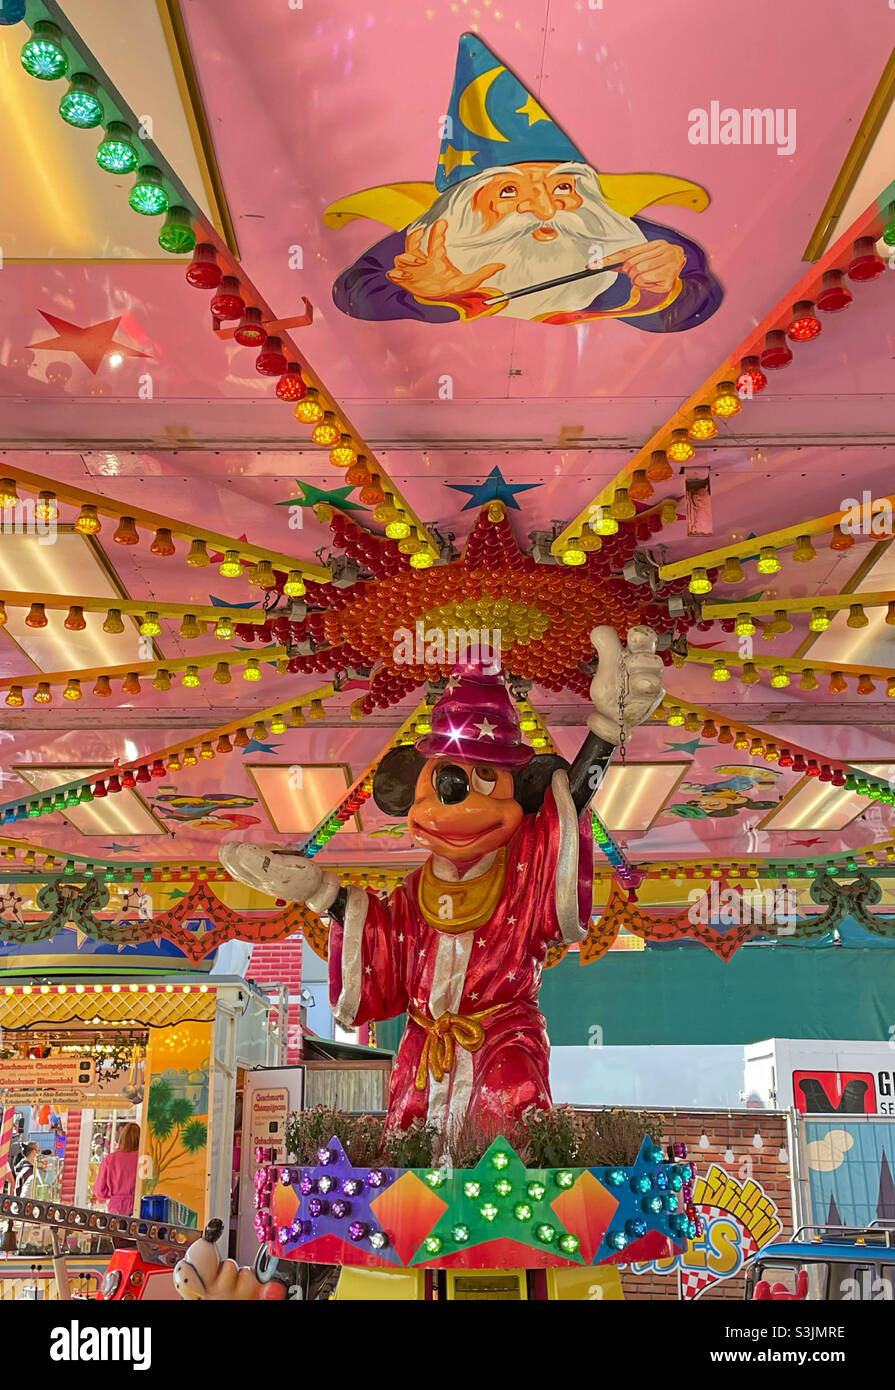 Disney on fairground. Stock Photo